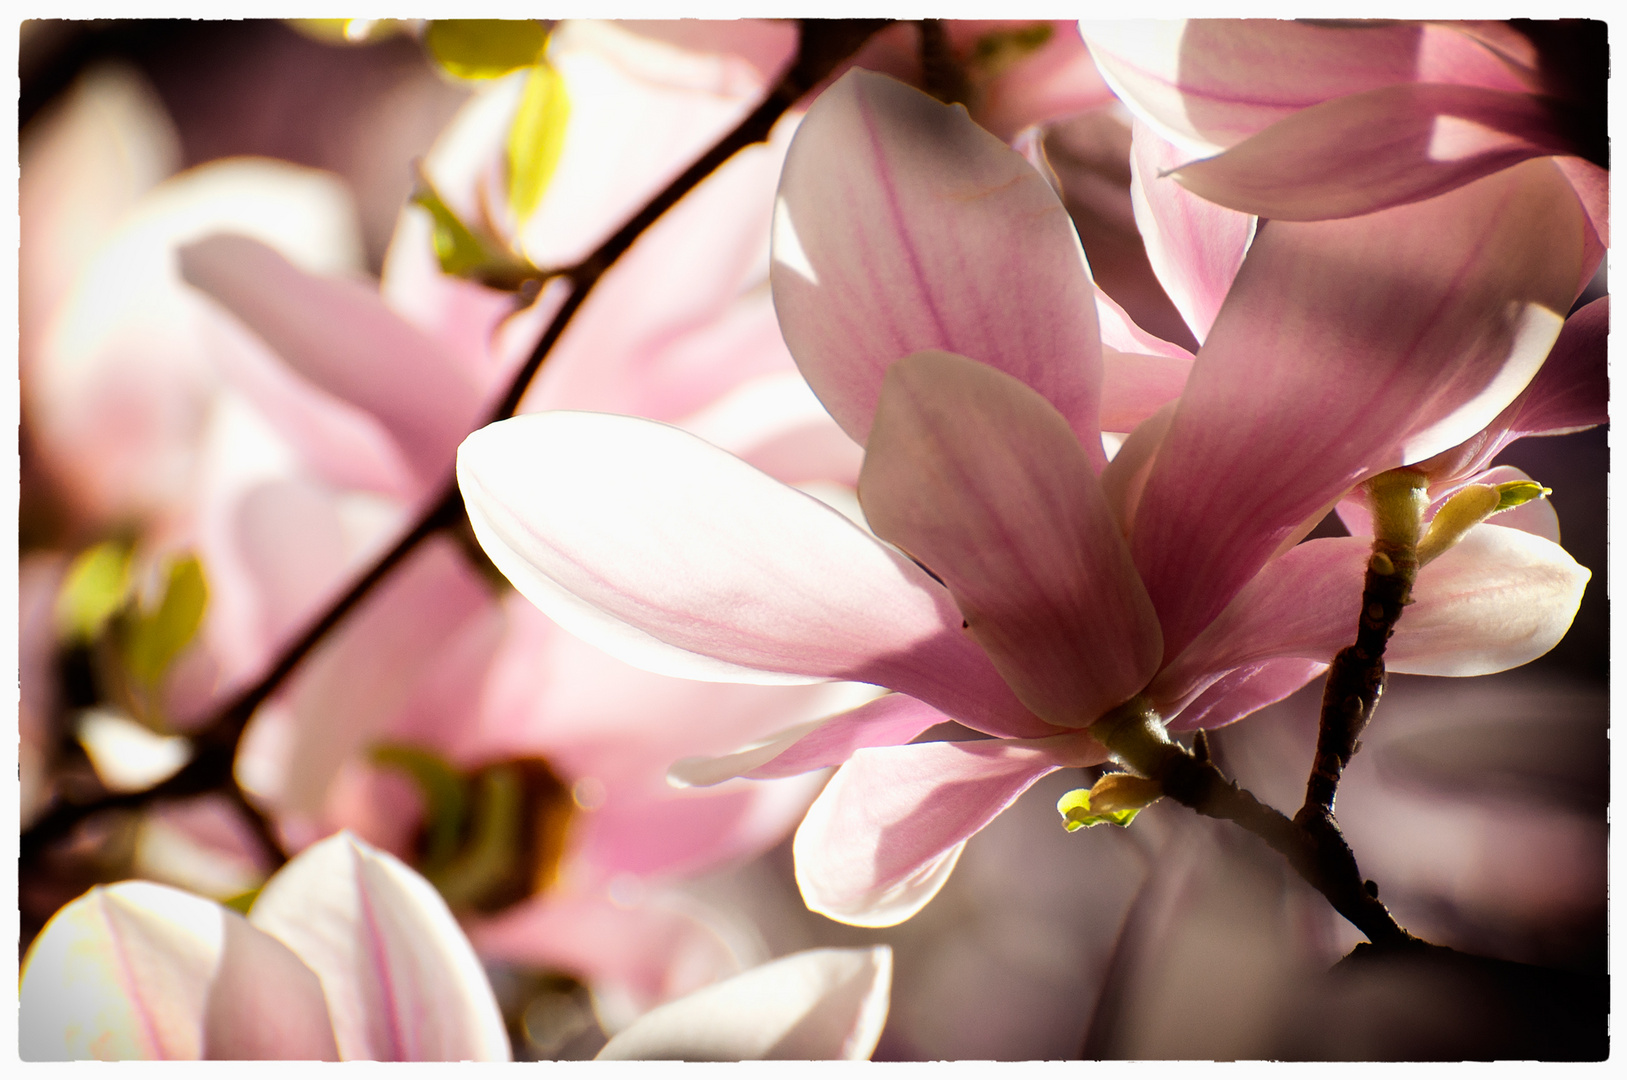 ...magnolia sunshine...